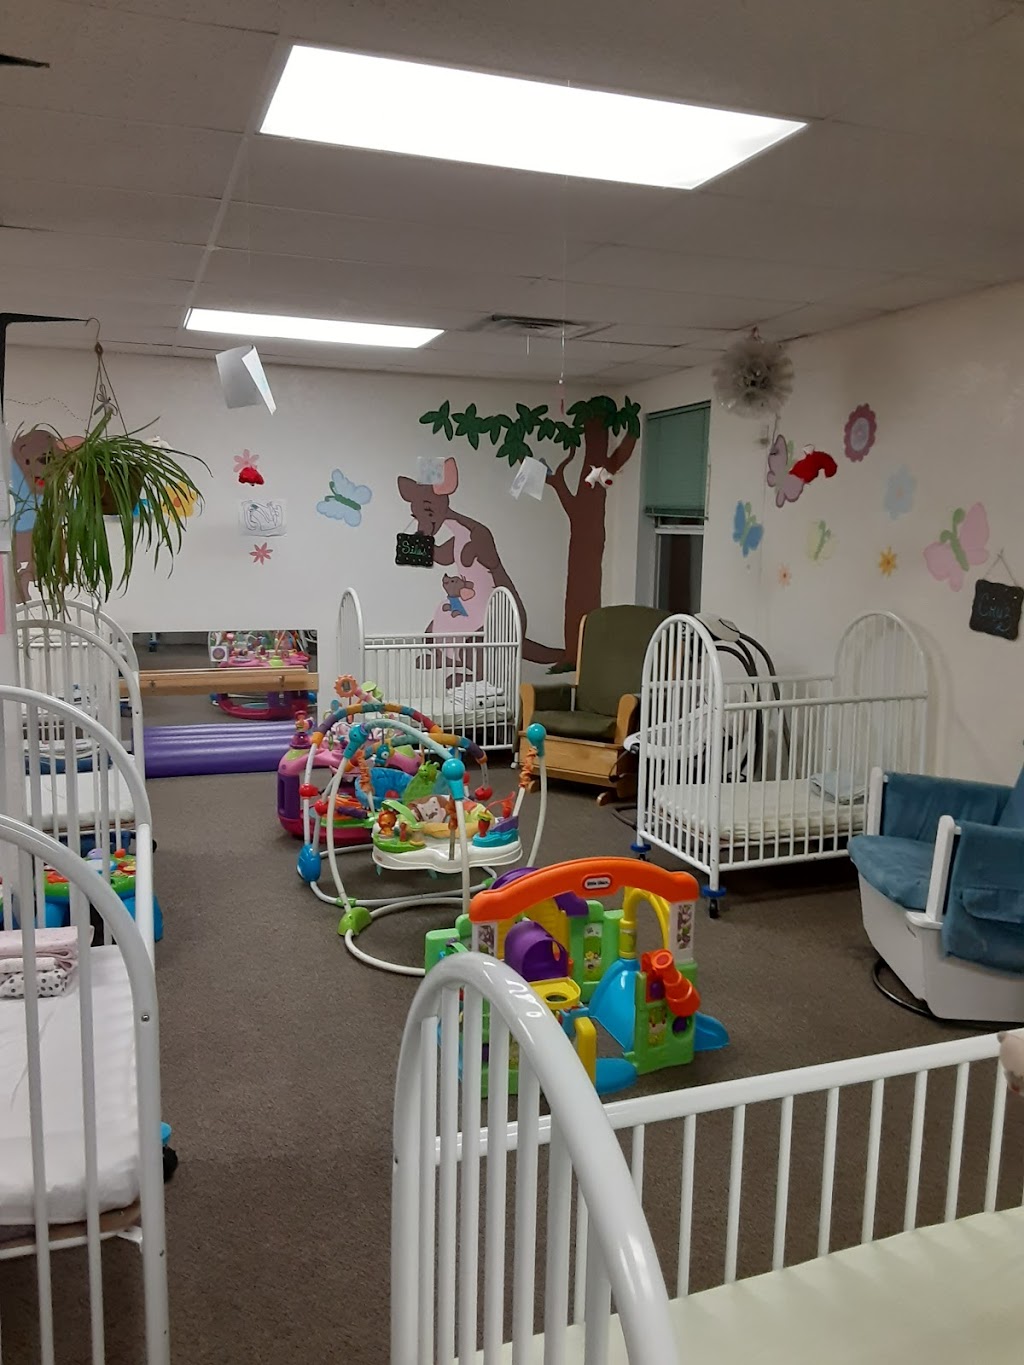 Kids Korner Preschool & Daycare | 207 Courthouse Rd SE, Los Lunas, NM 87031, USA | Phone: (505) 565-2373